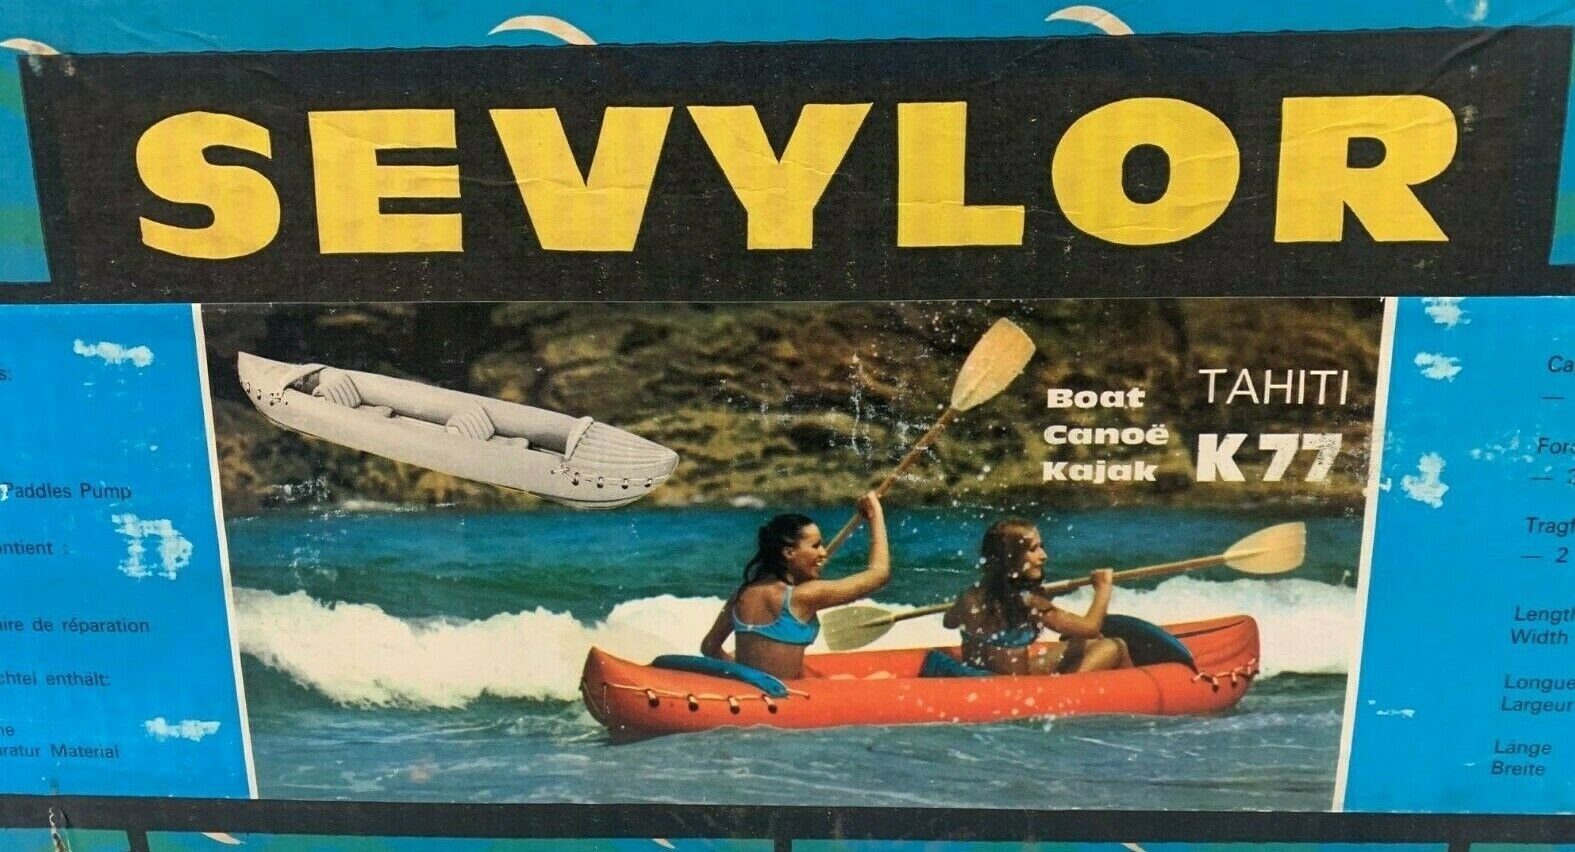 Sevylor Tahiti K77 Inflatable Boat Canoe Kayak Two-Person New in Box